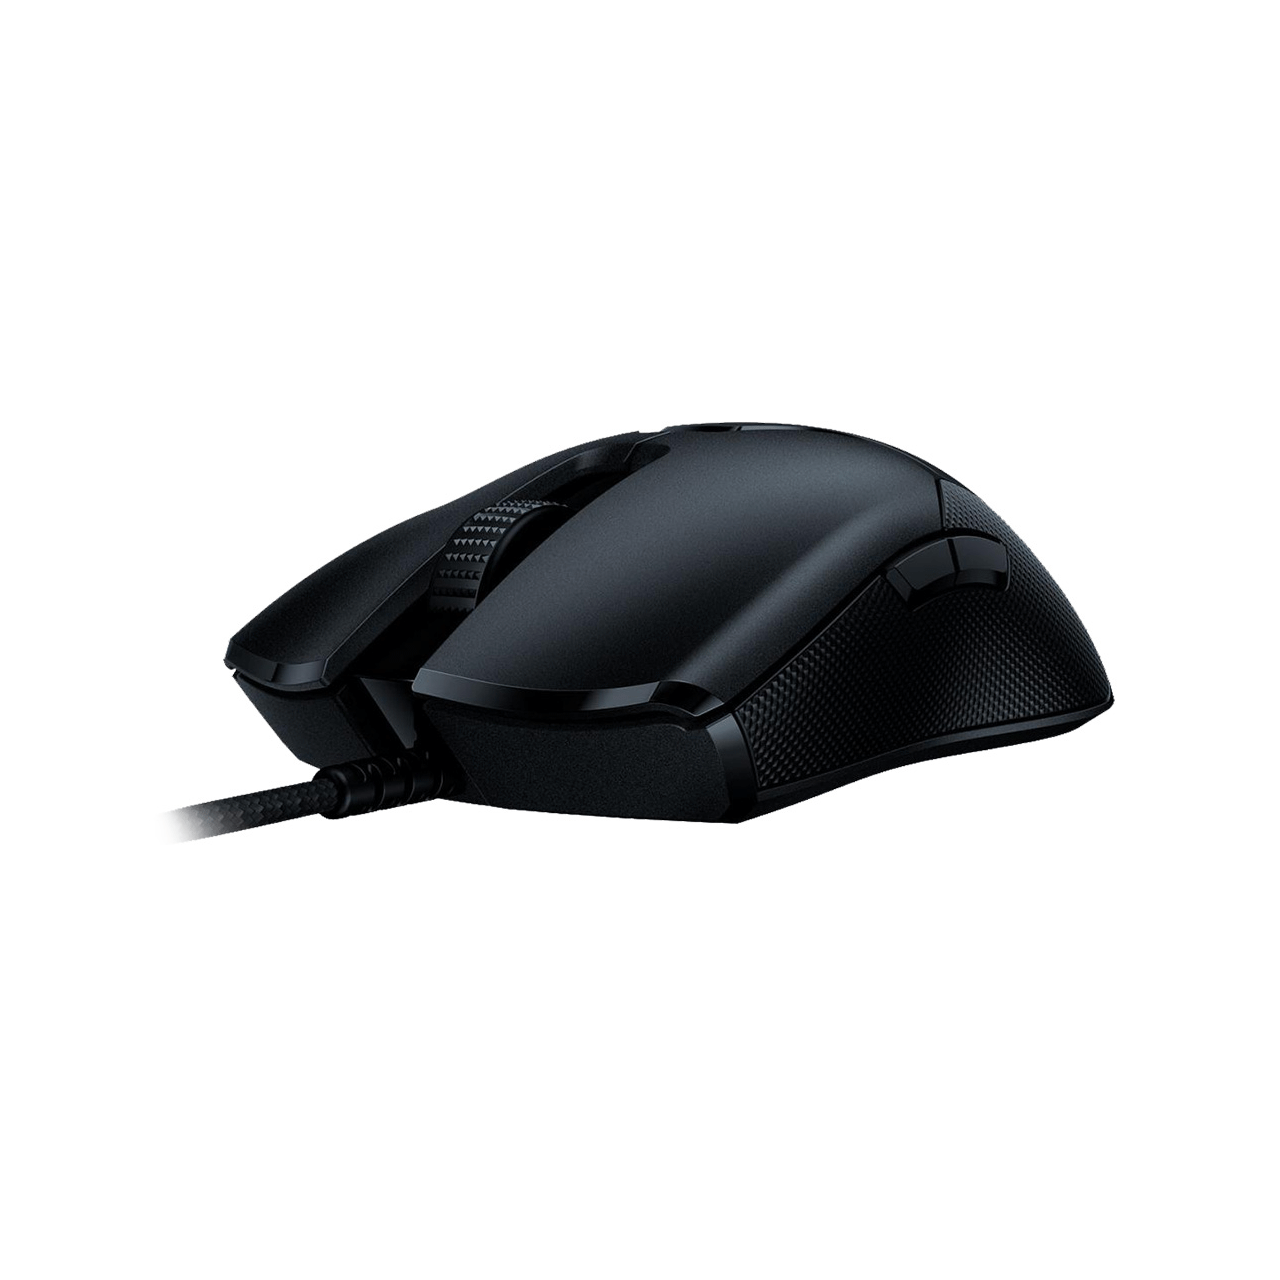 Razer--Viper-8KHz-Wired-Gaming-Mouse